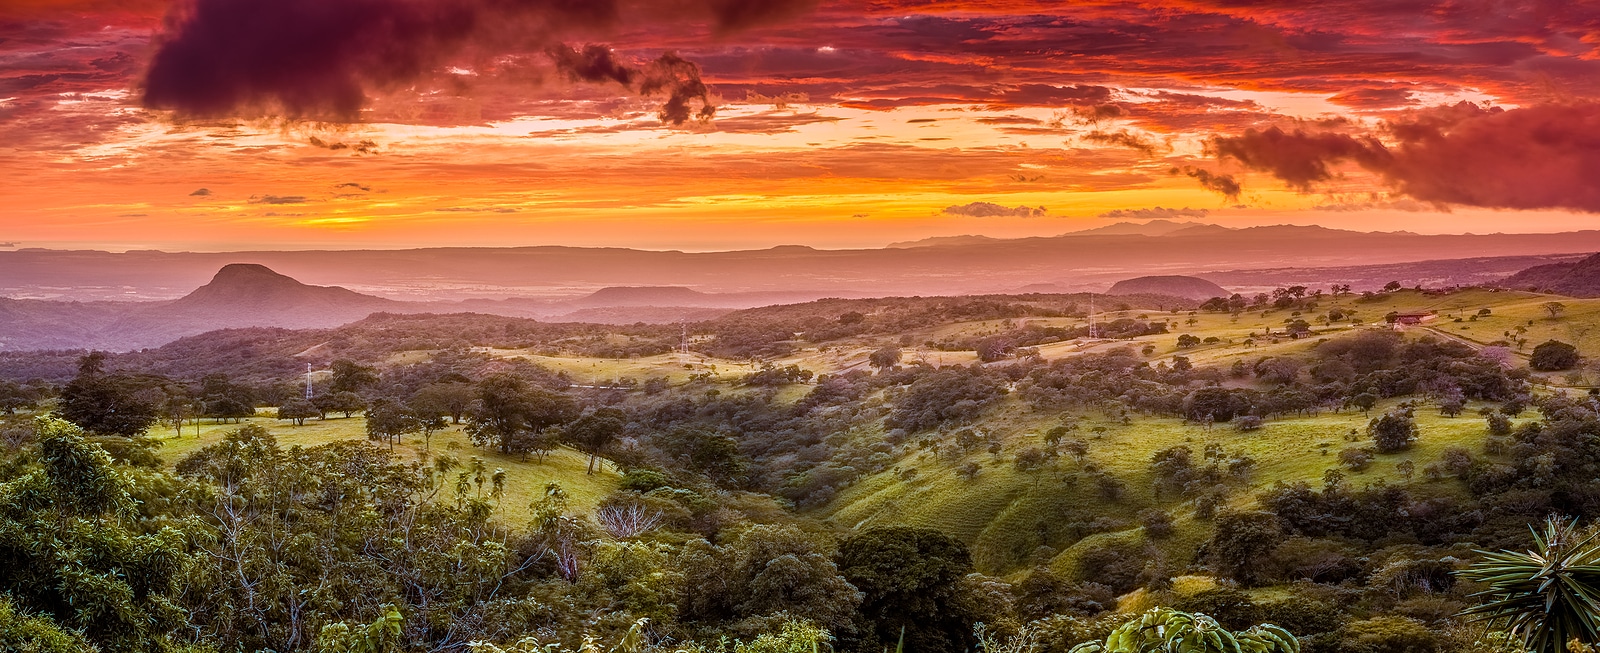 Dramatic sunset in Santa Rosa National Park in Costa Rica